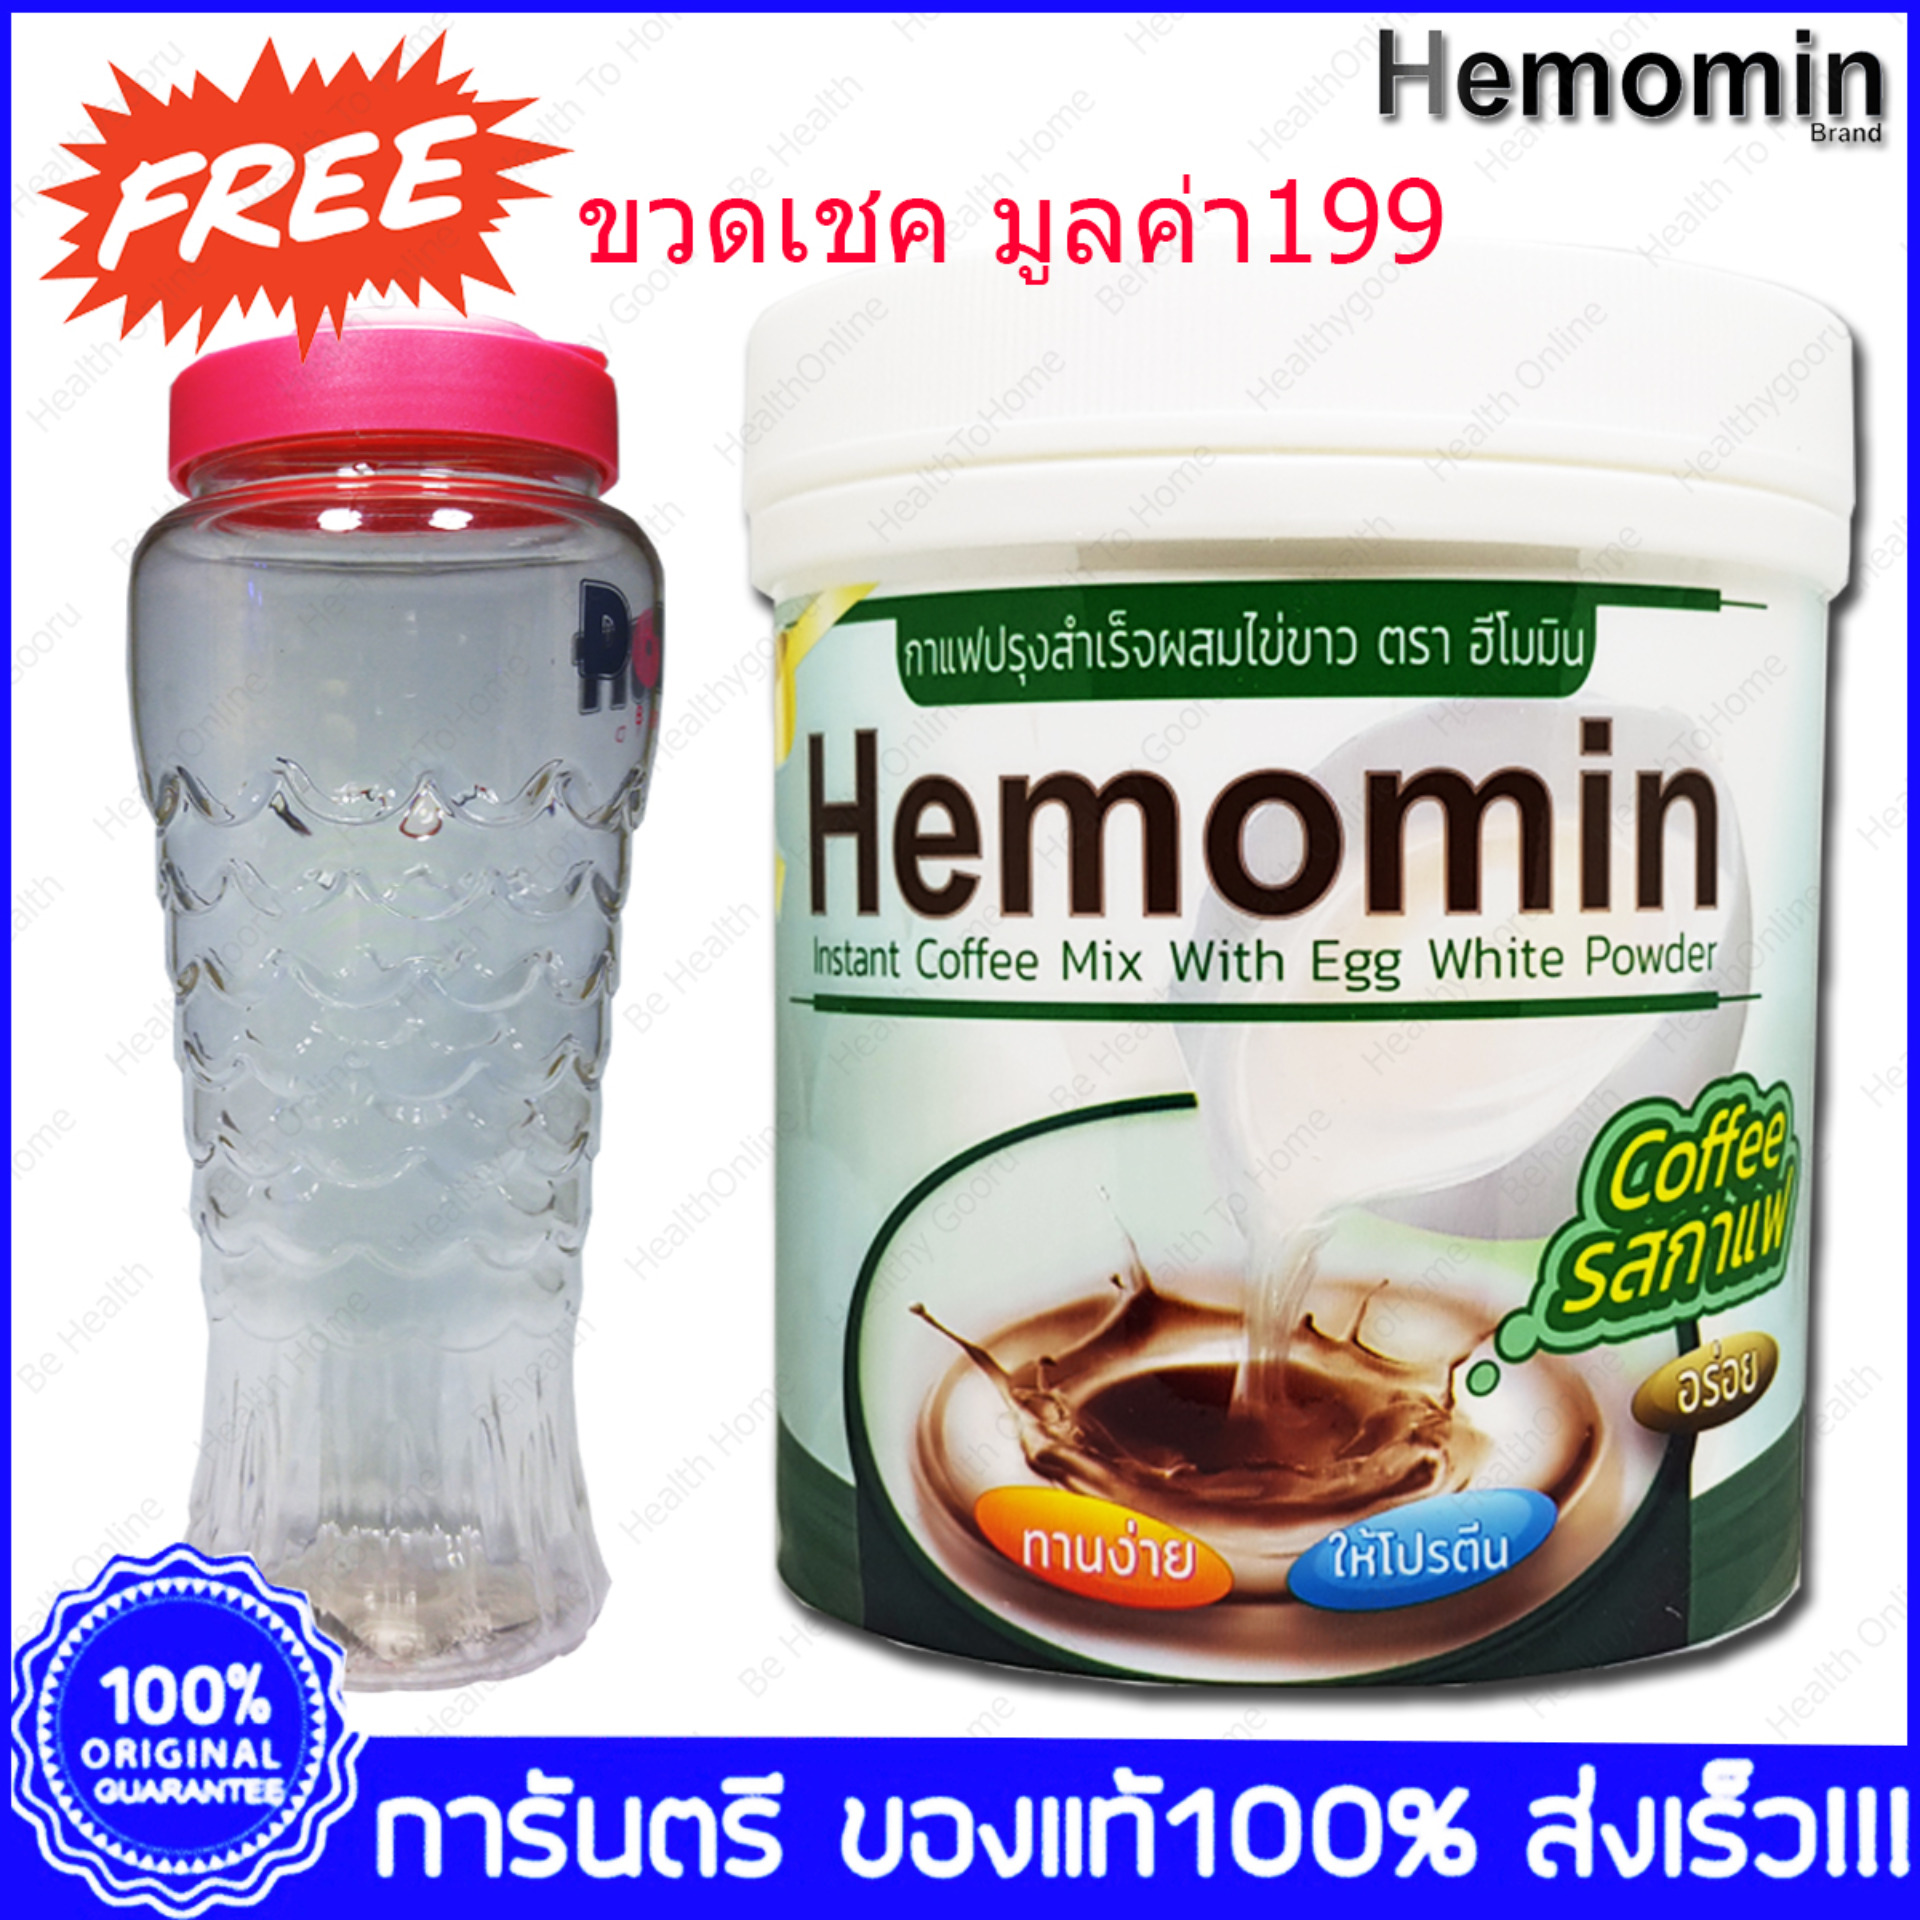 Hemomin Coffee Egg Albumin Powder โปรตีน ไข่ขาวผง รสกาแฟ ฮีโมมิน  400g. X 1 Bottle Free! แก้วเช็ค 1 ใบ มูลค่า 199 บาท